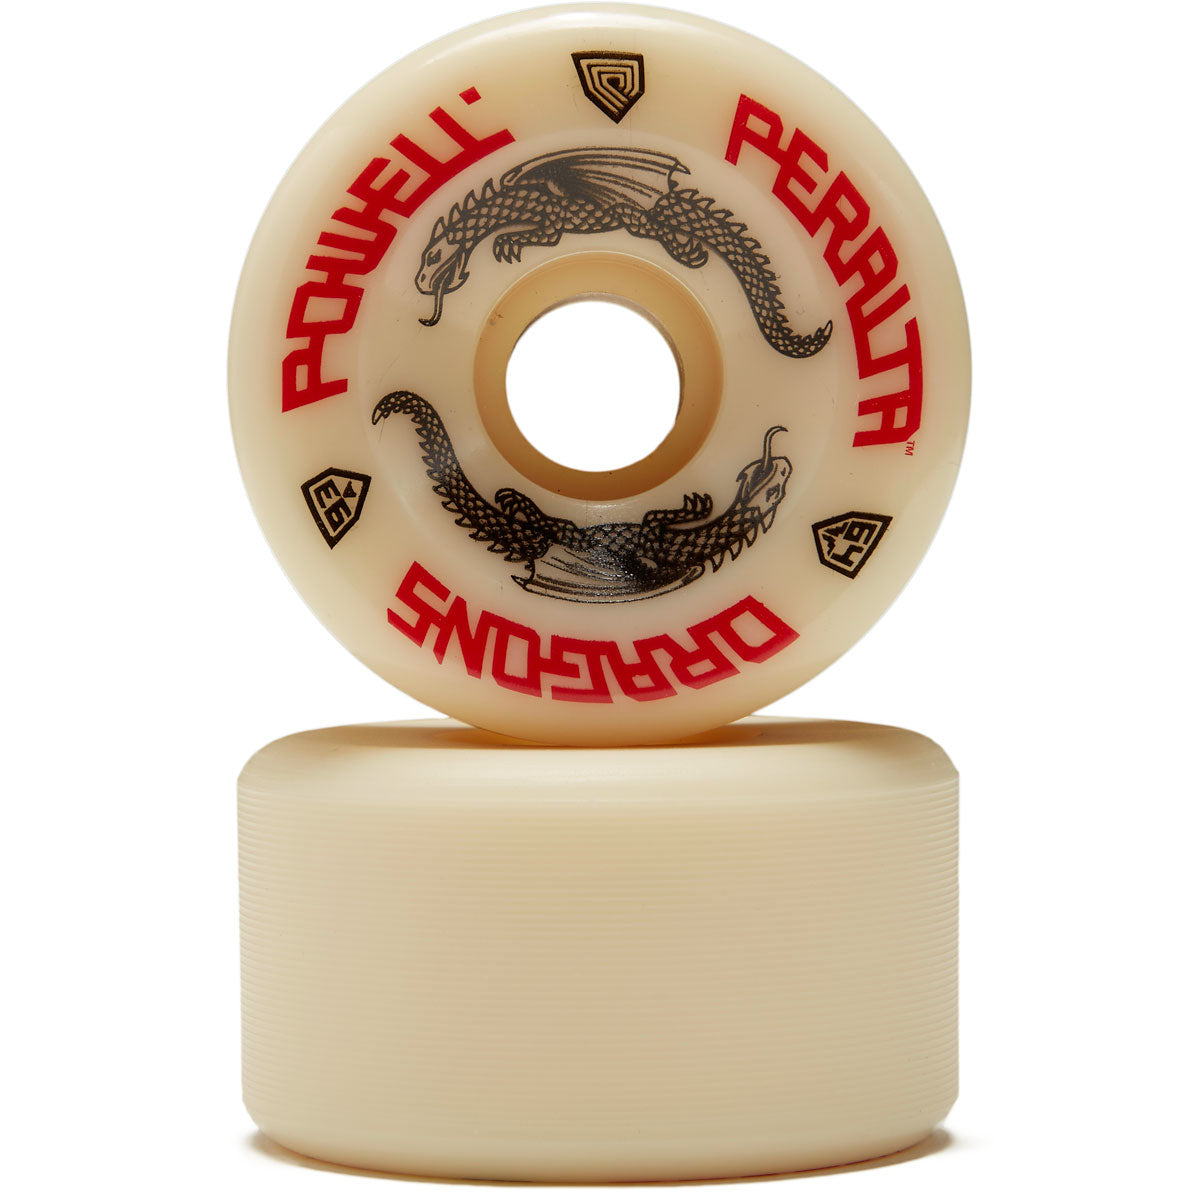 Powell-Peralta Dragon Formula G-Bones 93A Skateboard Wheels - Off White - 64mm image 2